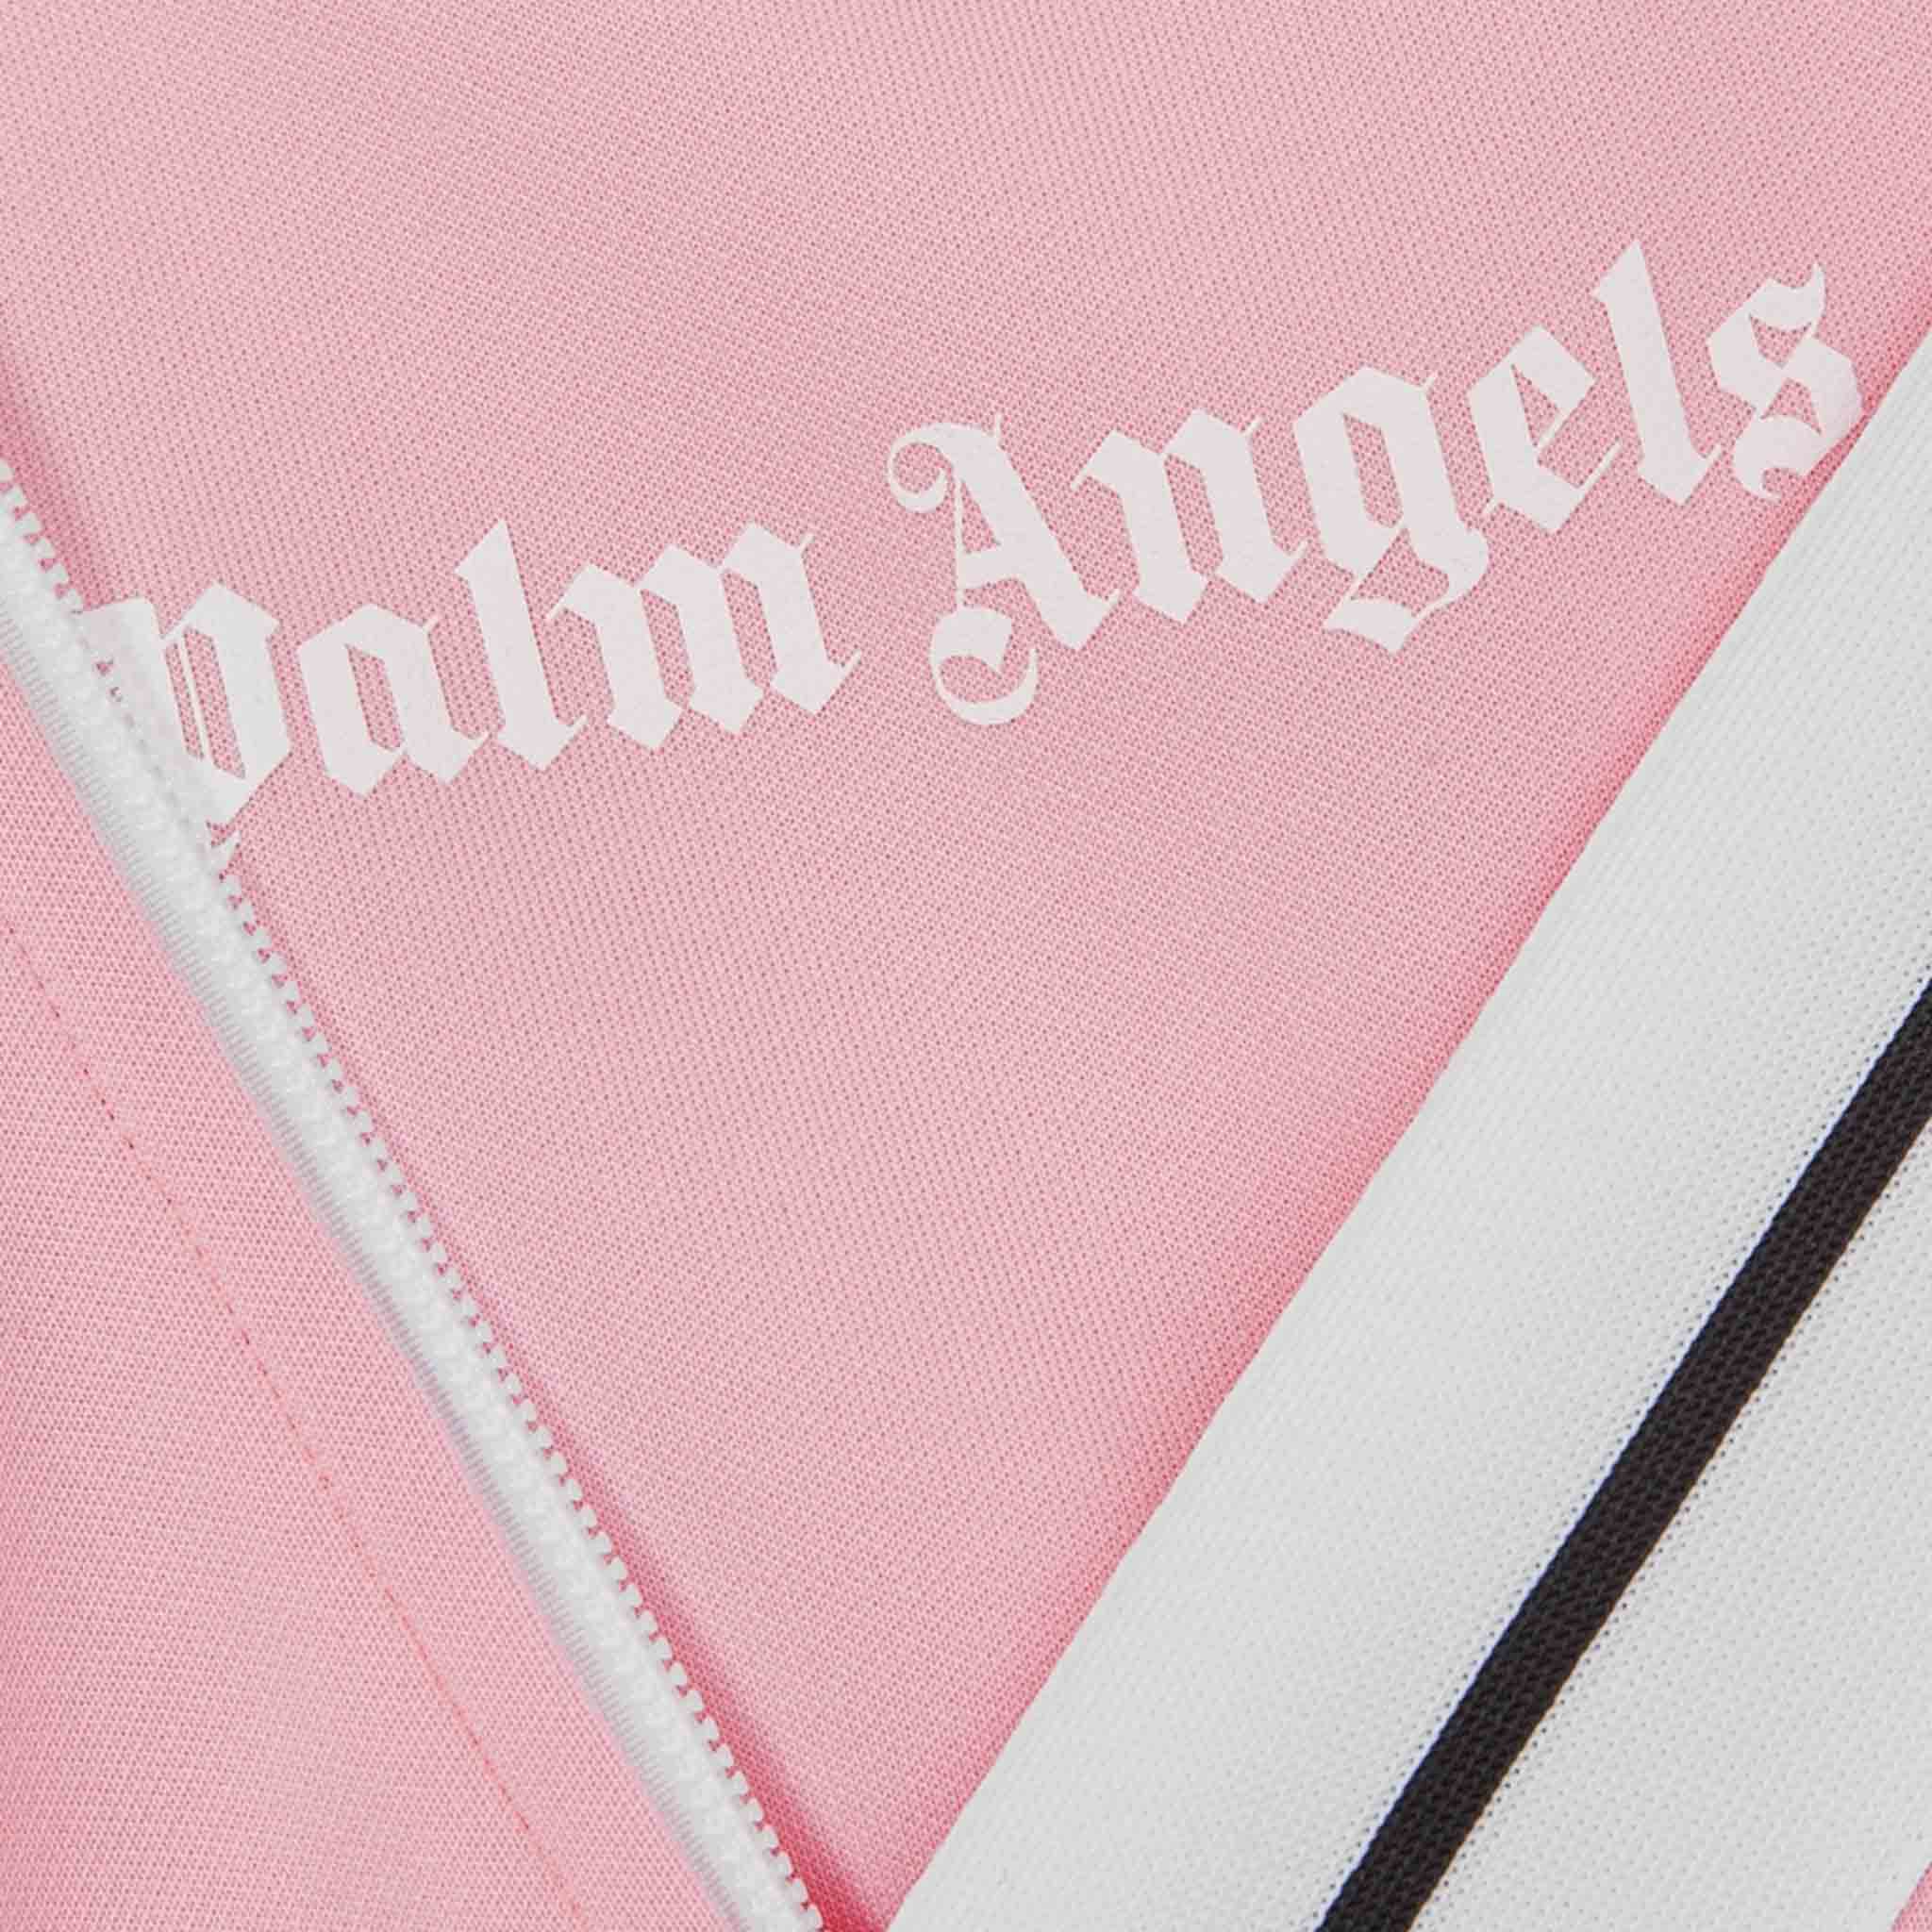 Palm Angels Women's Bomber Track Jacket